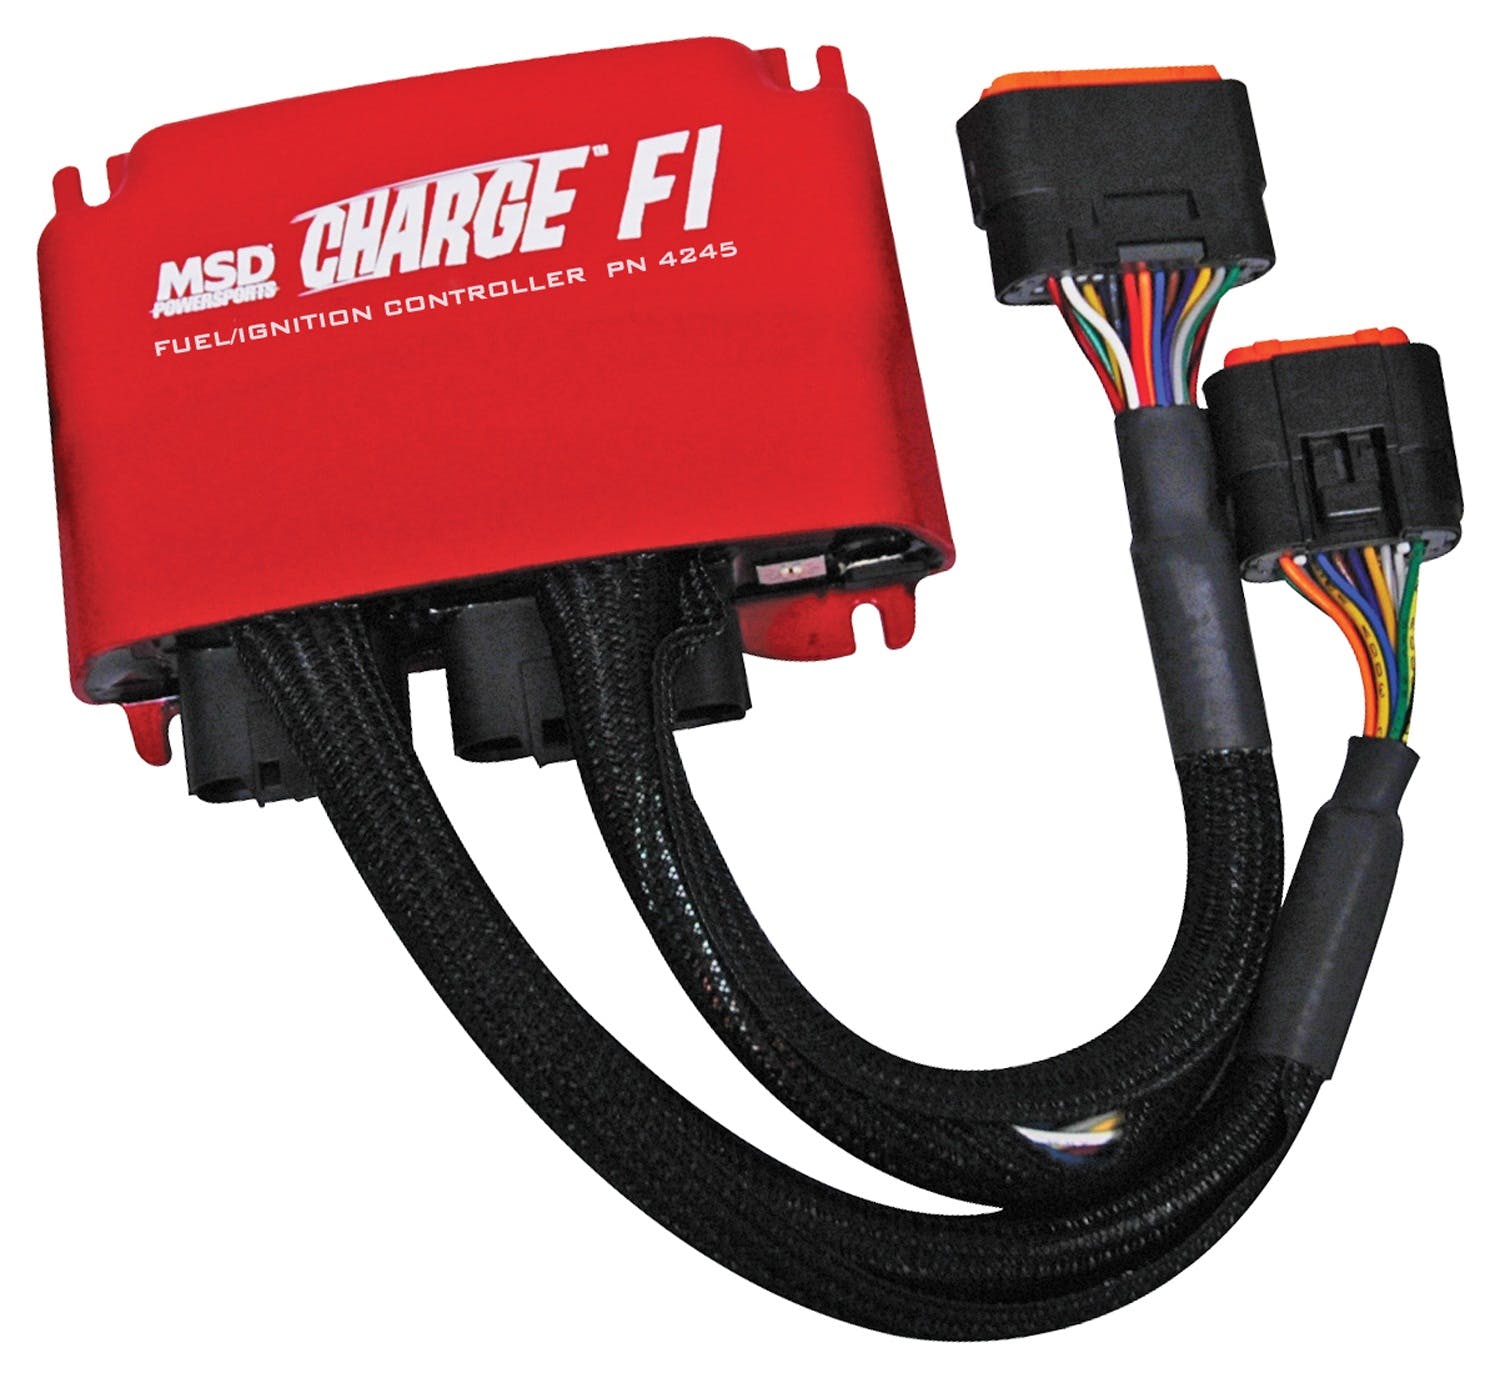 MSD Performance 4245 Charge Enhancer for Yamaha Rhino 700FI